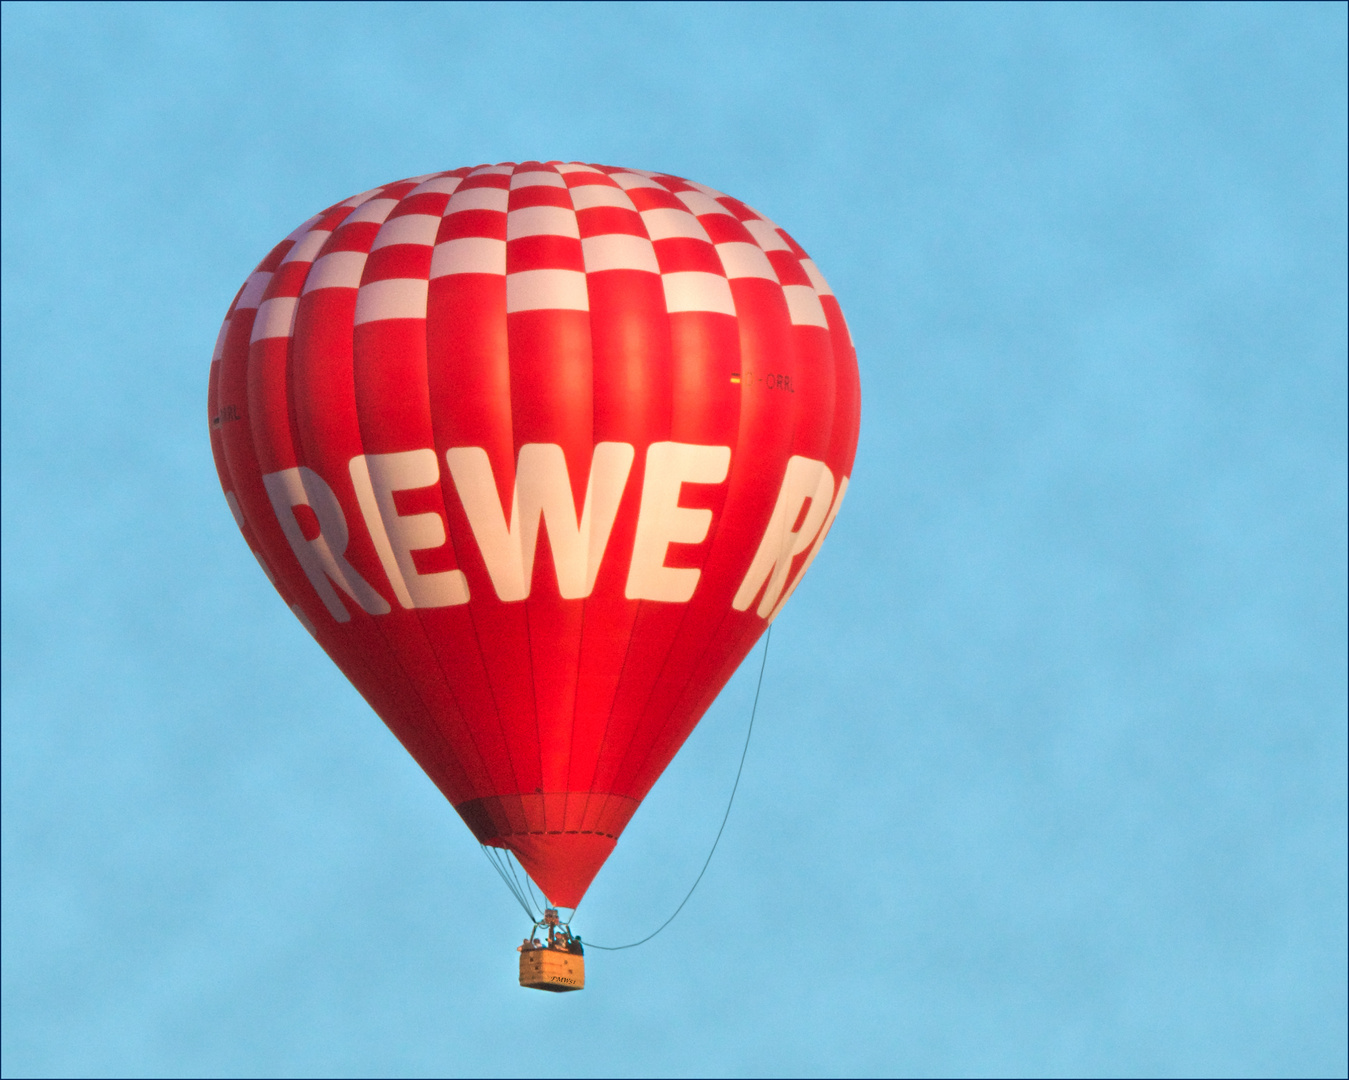 Der REWE Heißluftballon